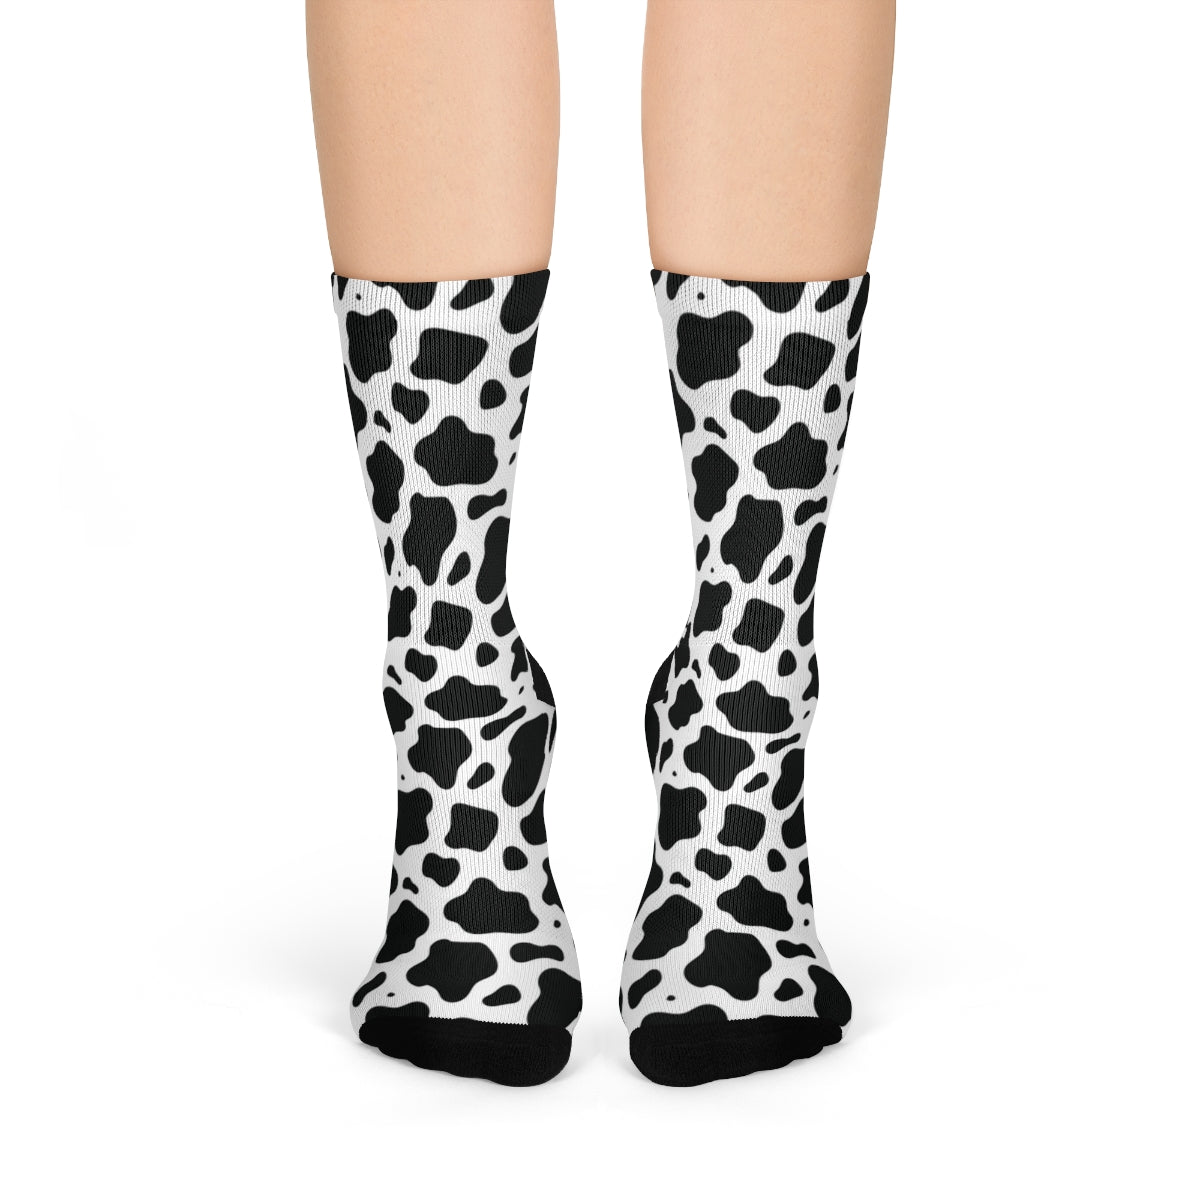 Cow Print Socks, Black White Crew 3D Sublimation Women Men Designer Fun Novelty Cool Funky Crazy Casual Unique Gift Starcove Fashion